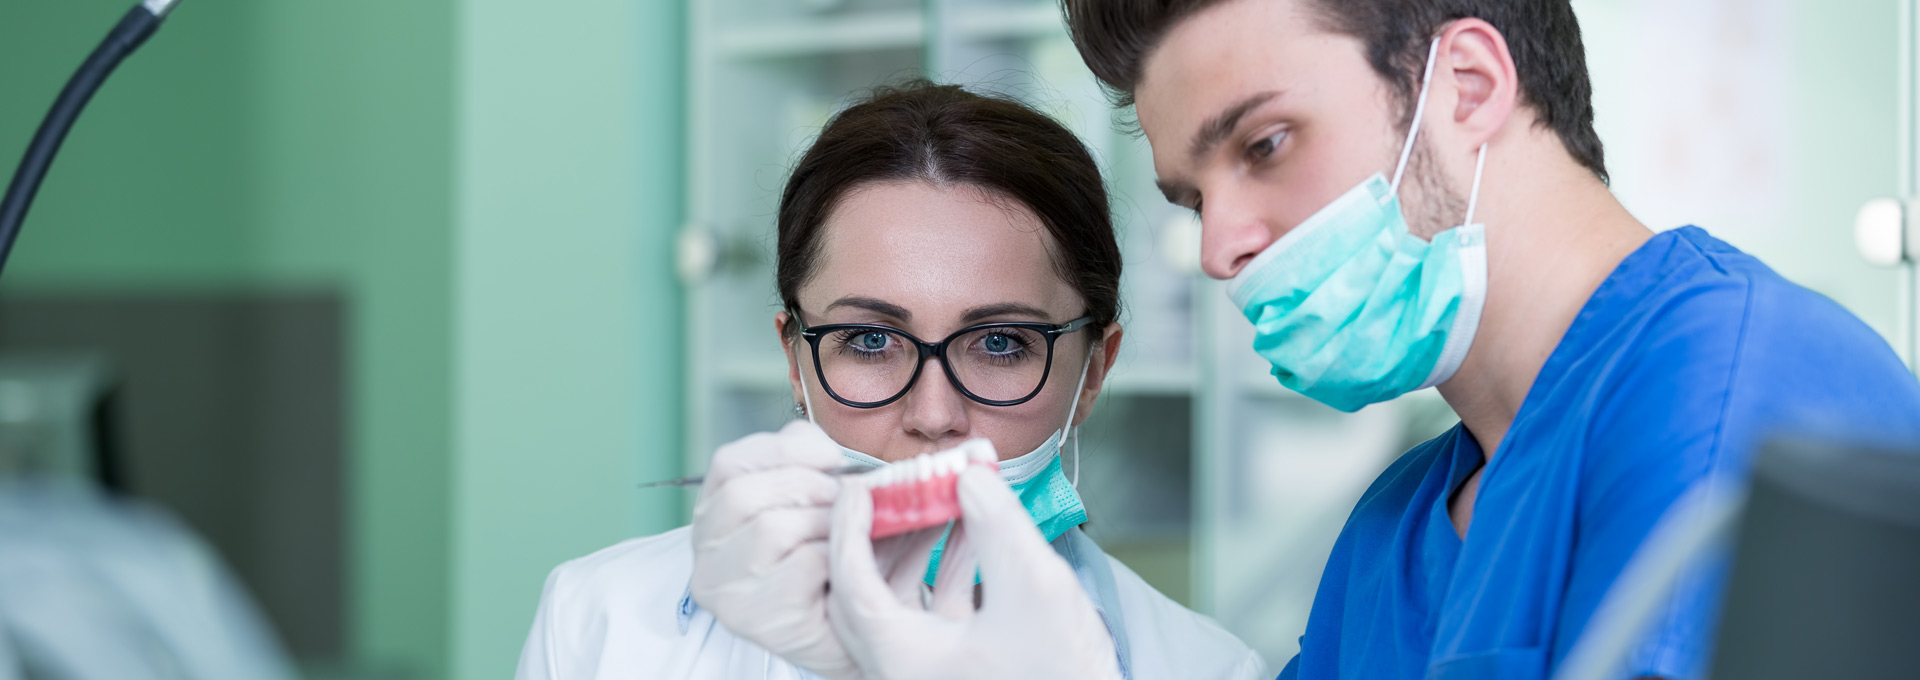 Reasons For Getting Dental Implants Melbourne